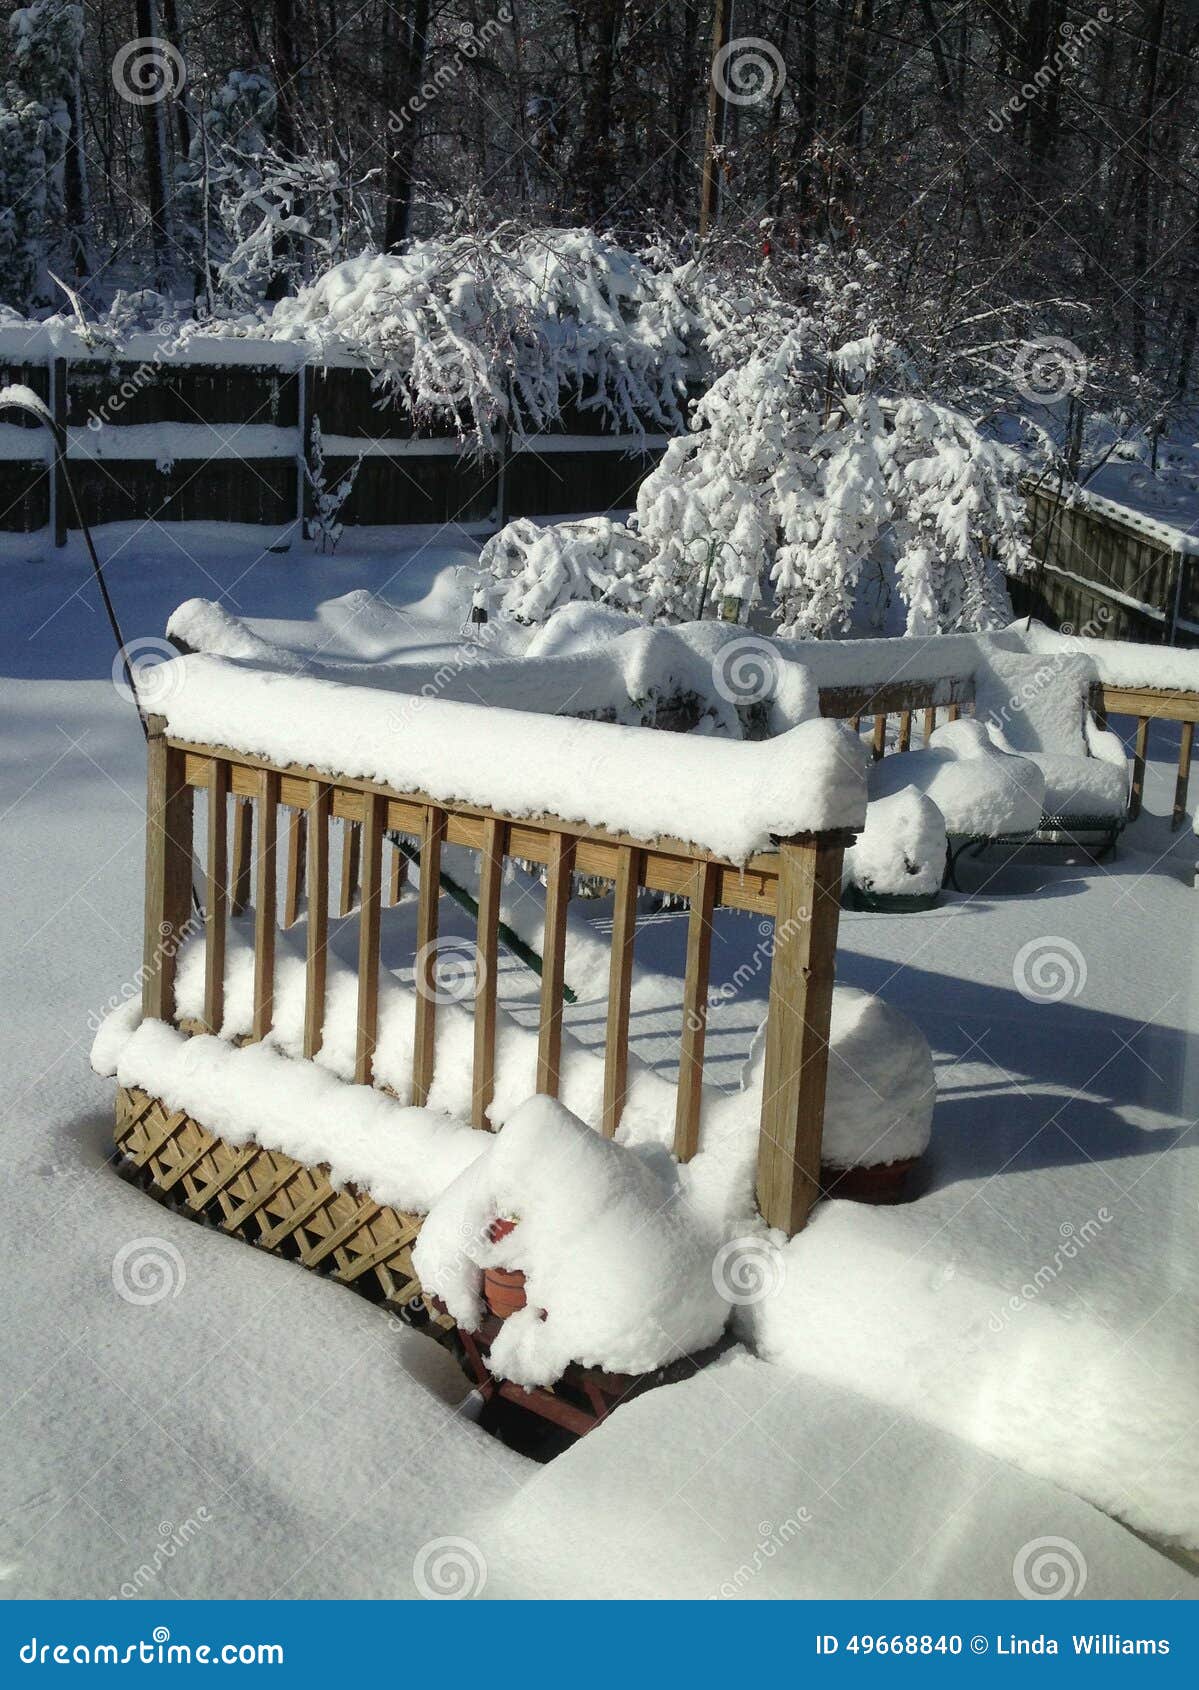 sunshine highlights snow on backyard deck and steps.